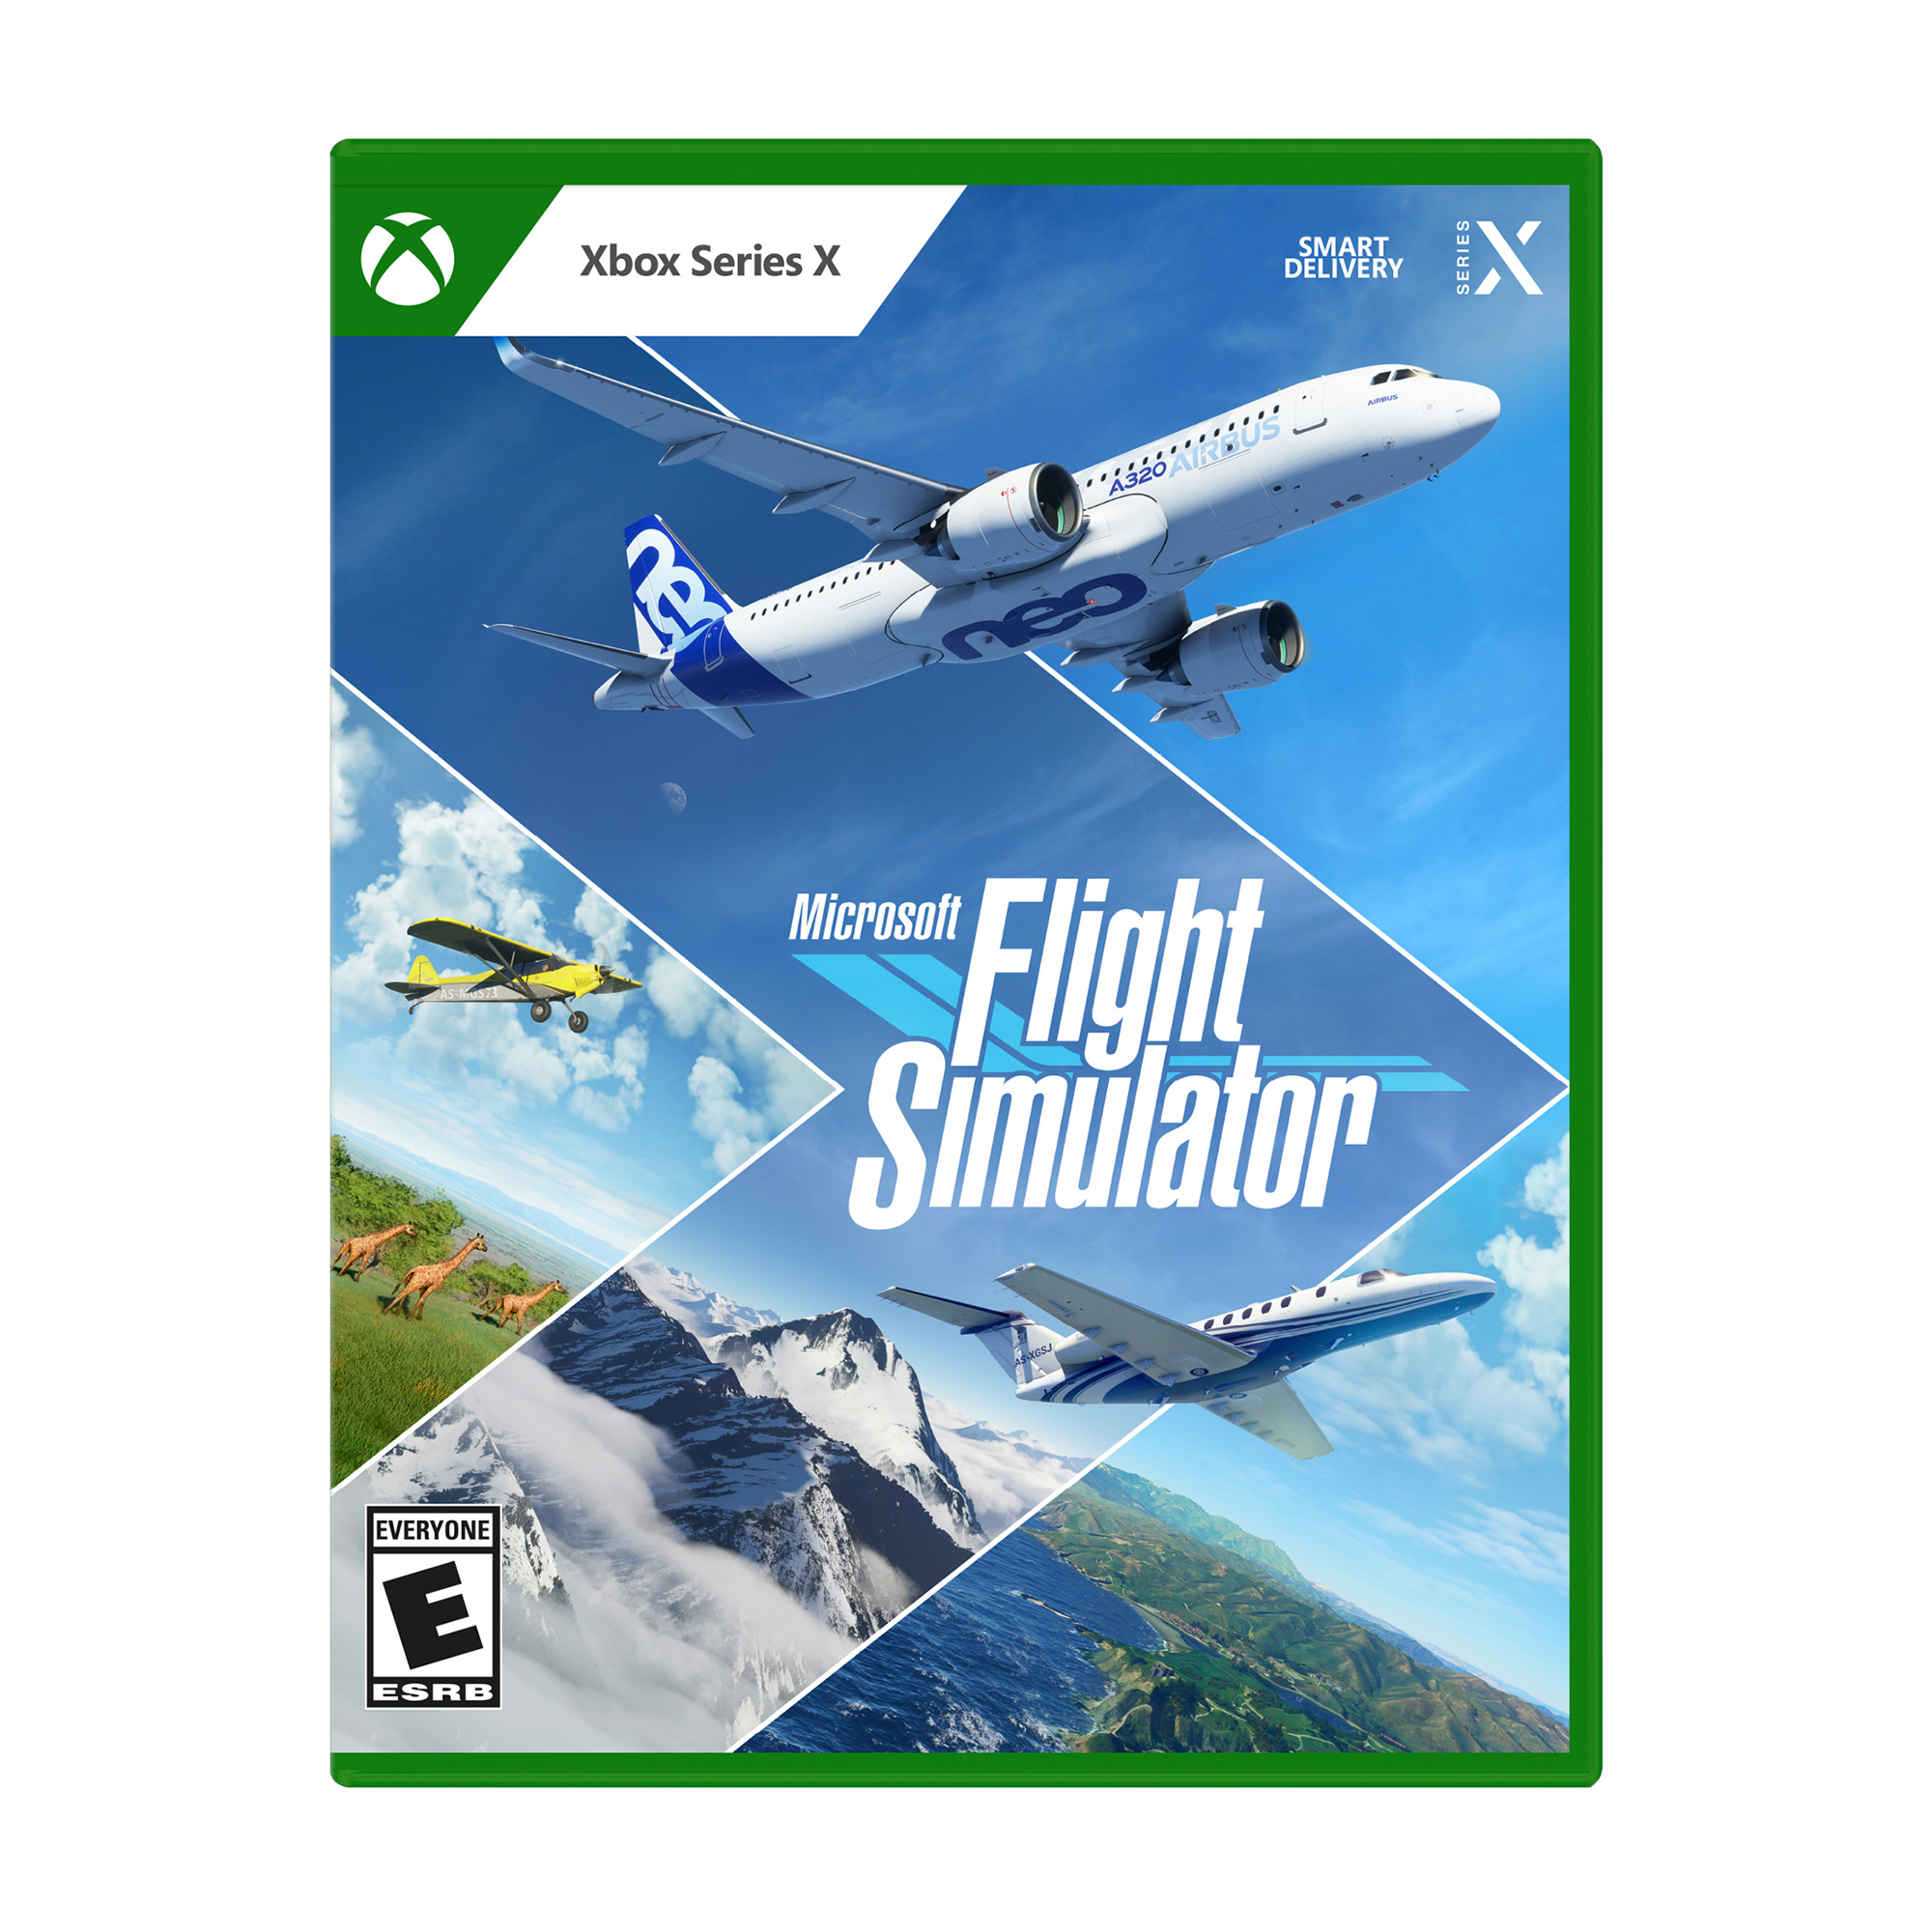 Microsoft Flight Simulator 2020, Xbox Series X [Physical] + FREE Shipping $39.99